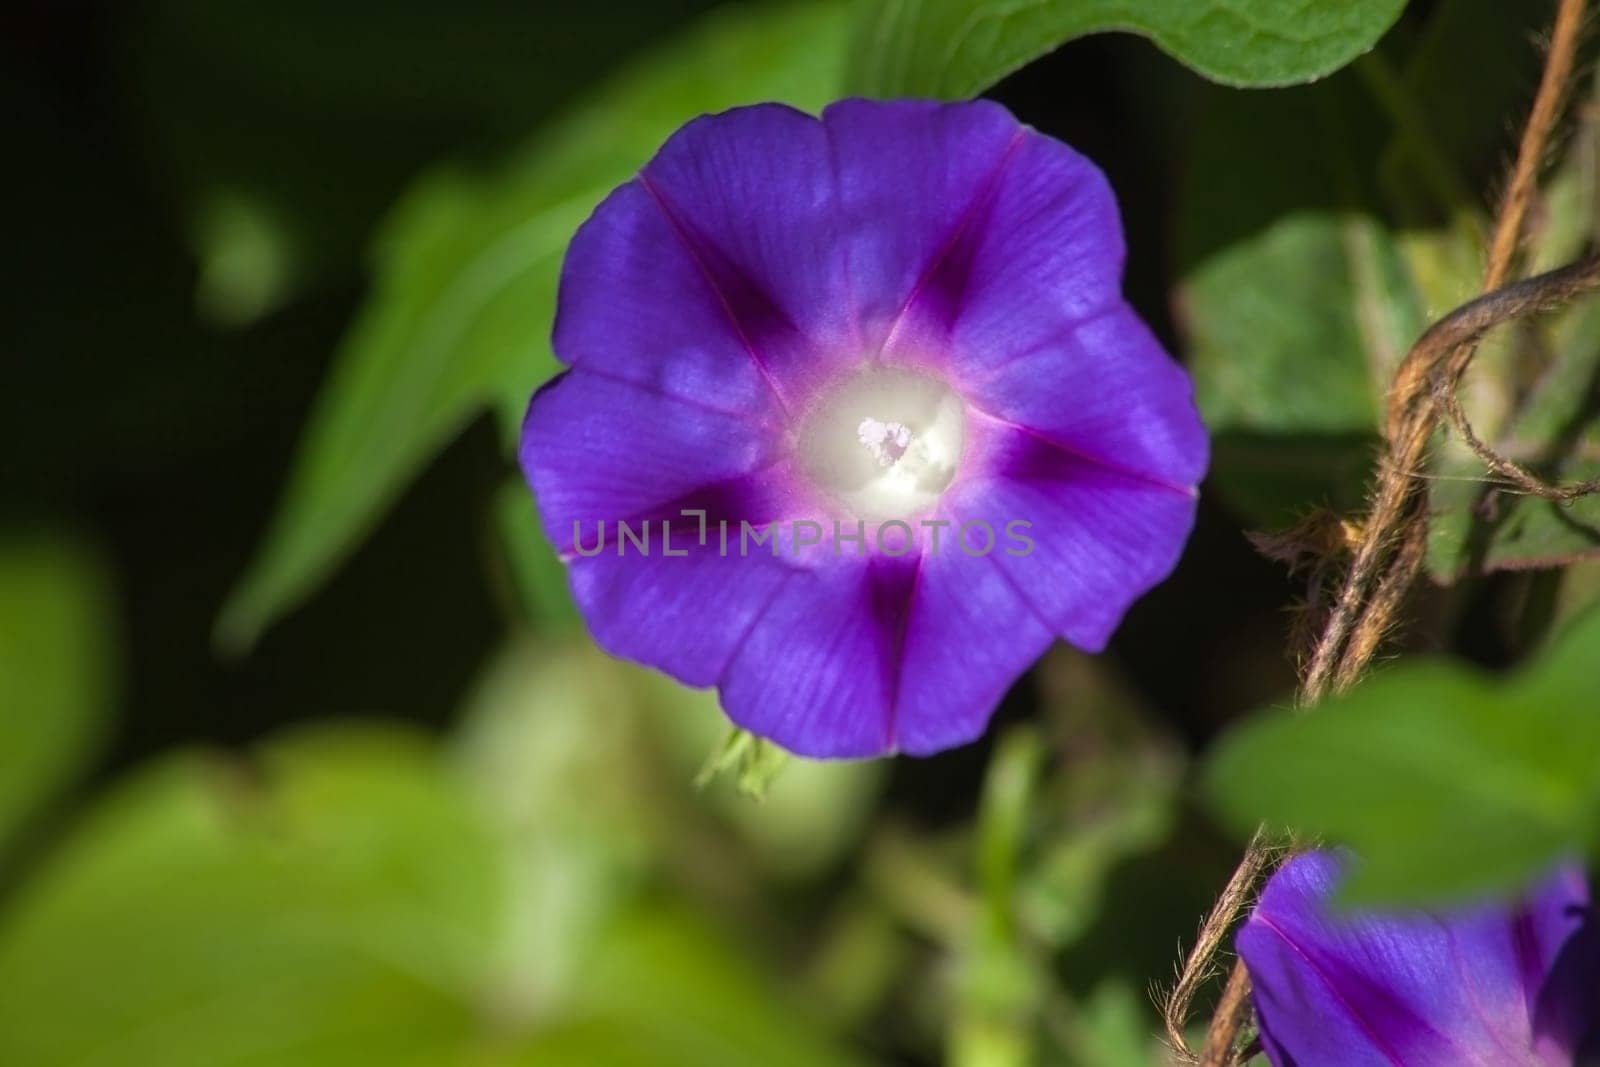 Macro image of a single flower of the Common Morning glory Ipomoea purpurea